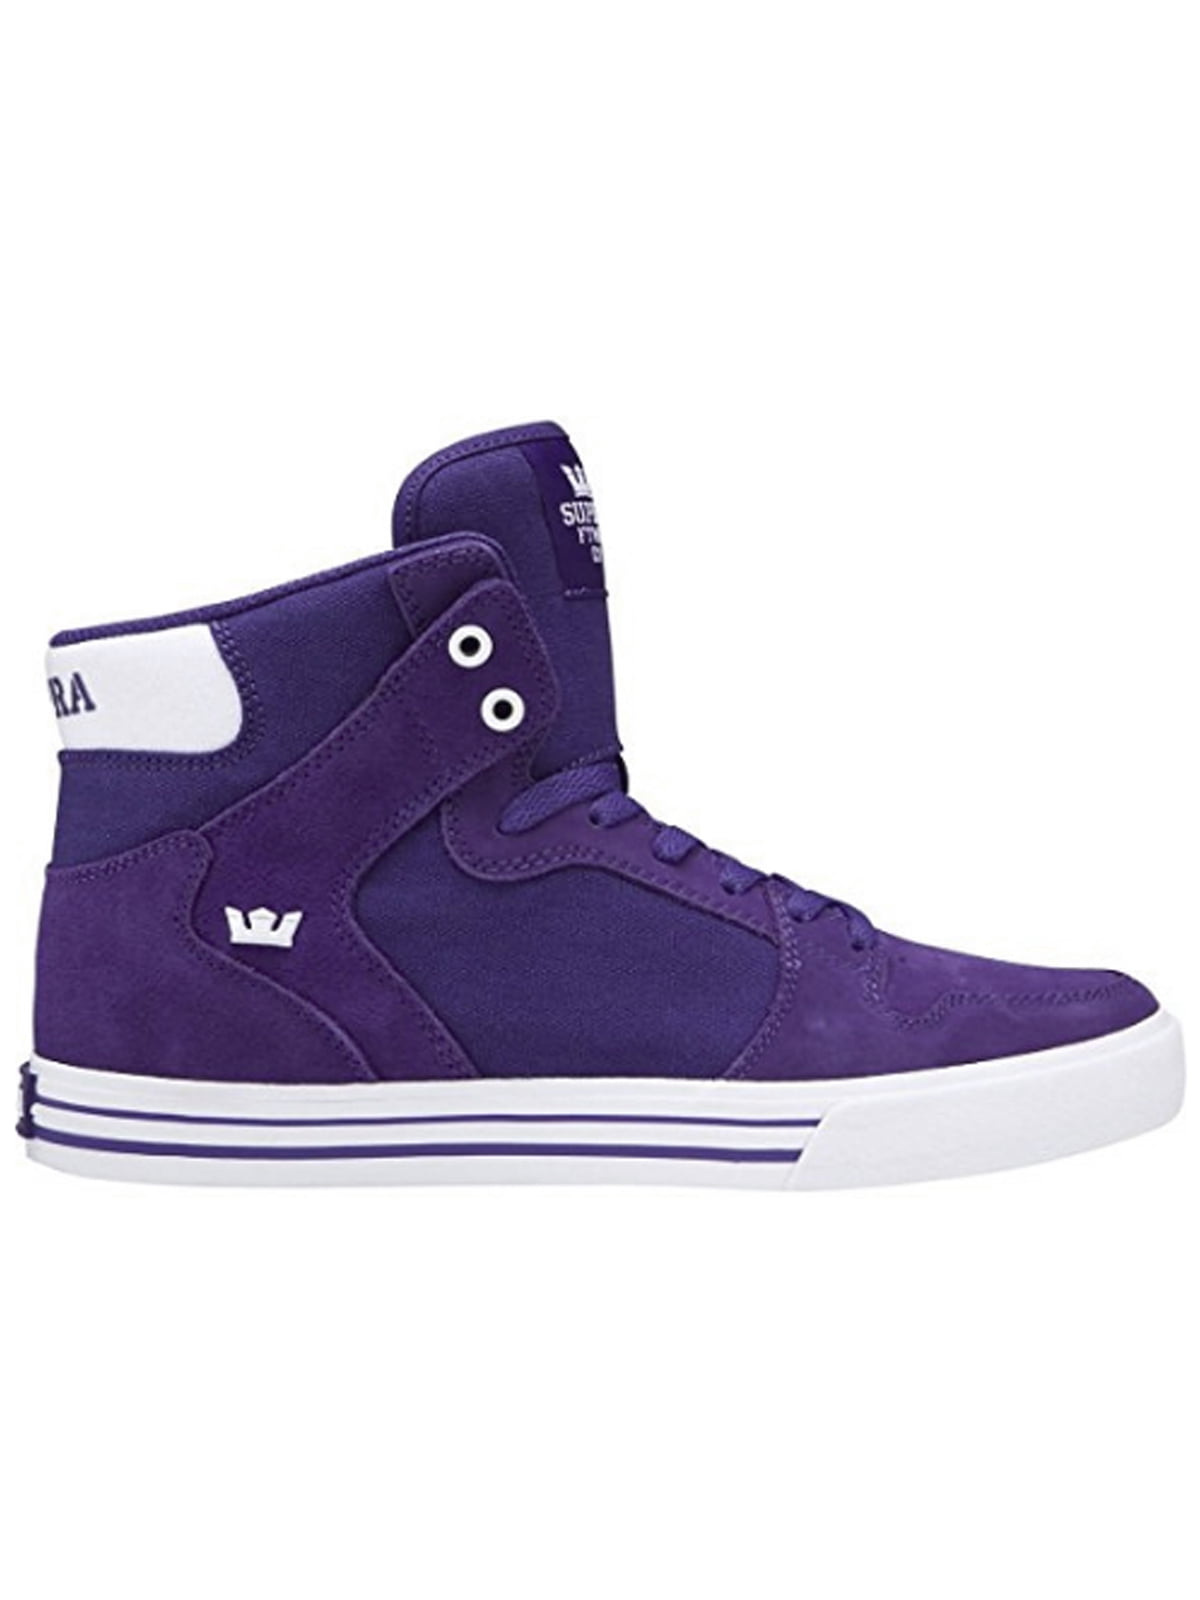 mythologie papier jukbeen Supra Vaider Men's Suede Hi Top Fashion Sneakers Athletic Shoes Purple  White 08044-501 - Walmart.com